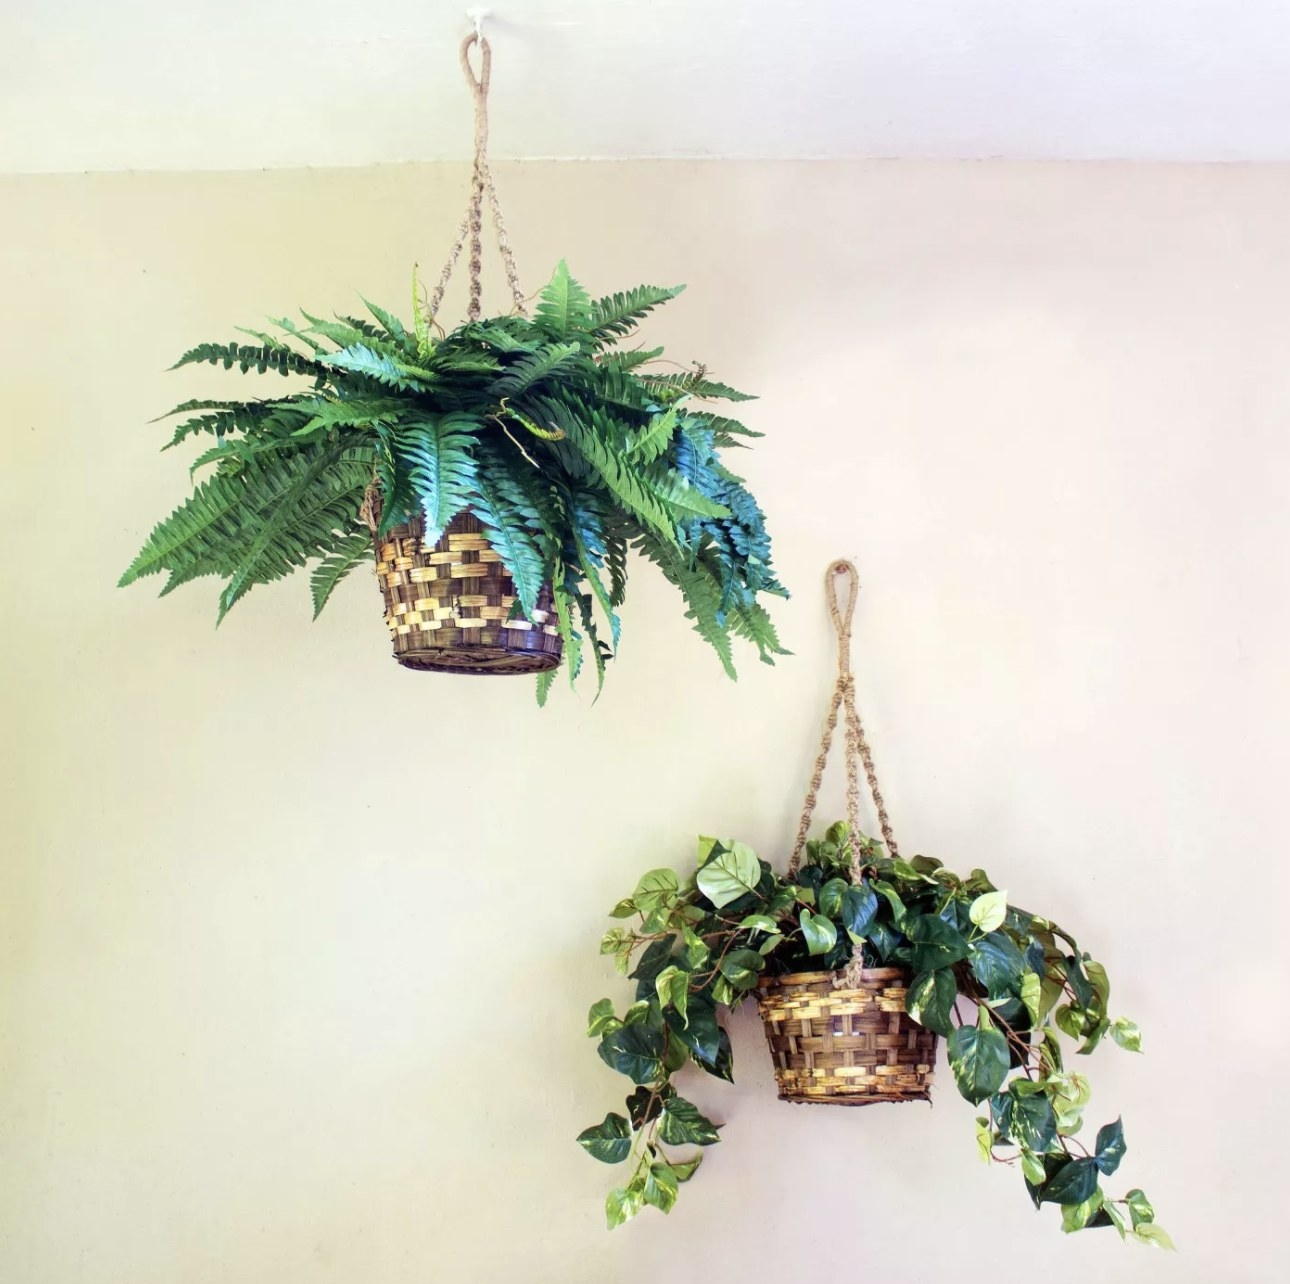 Hanging plants